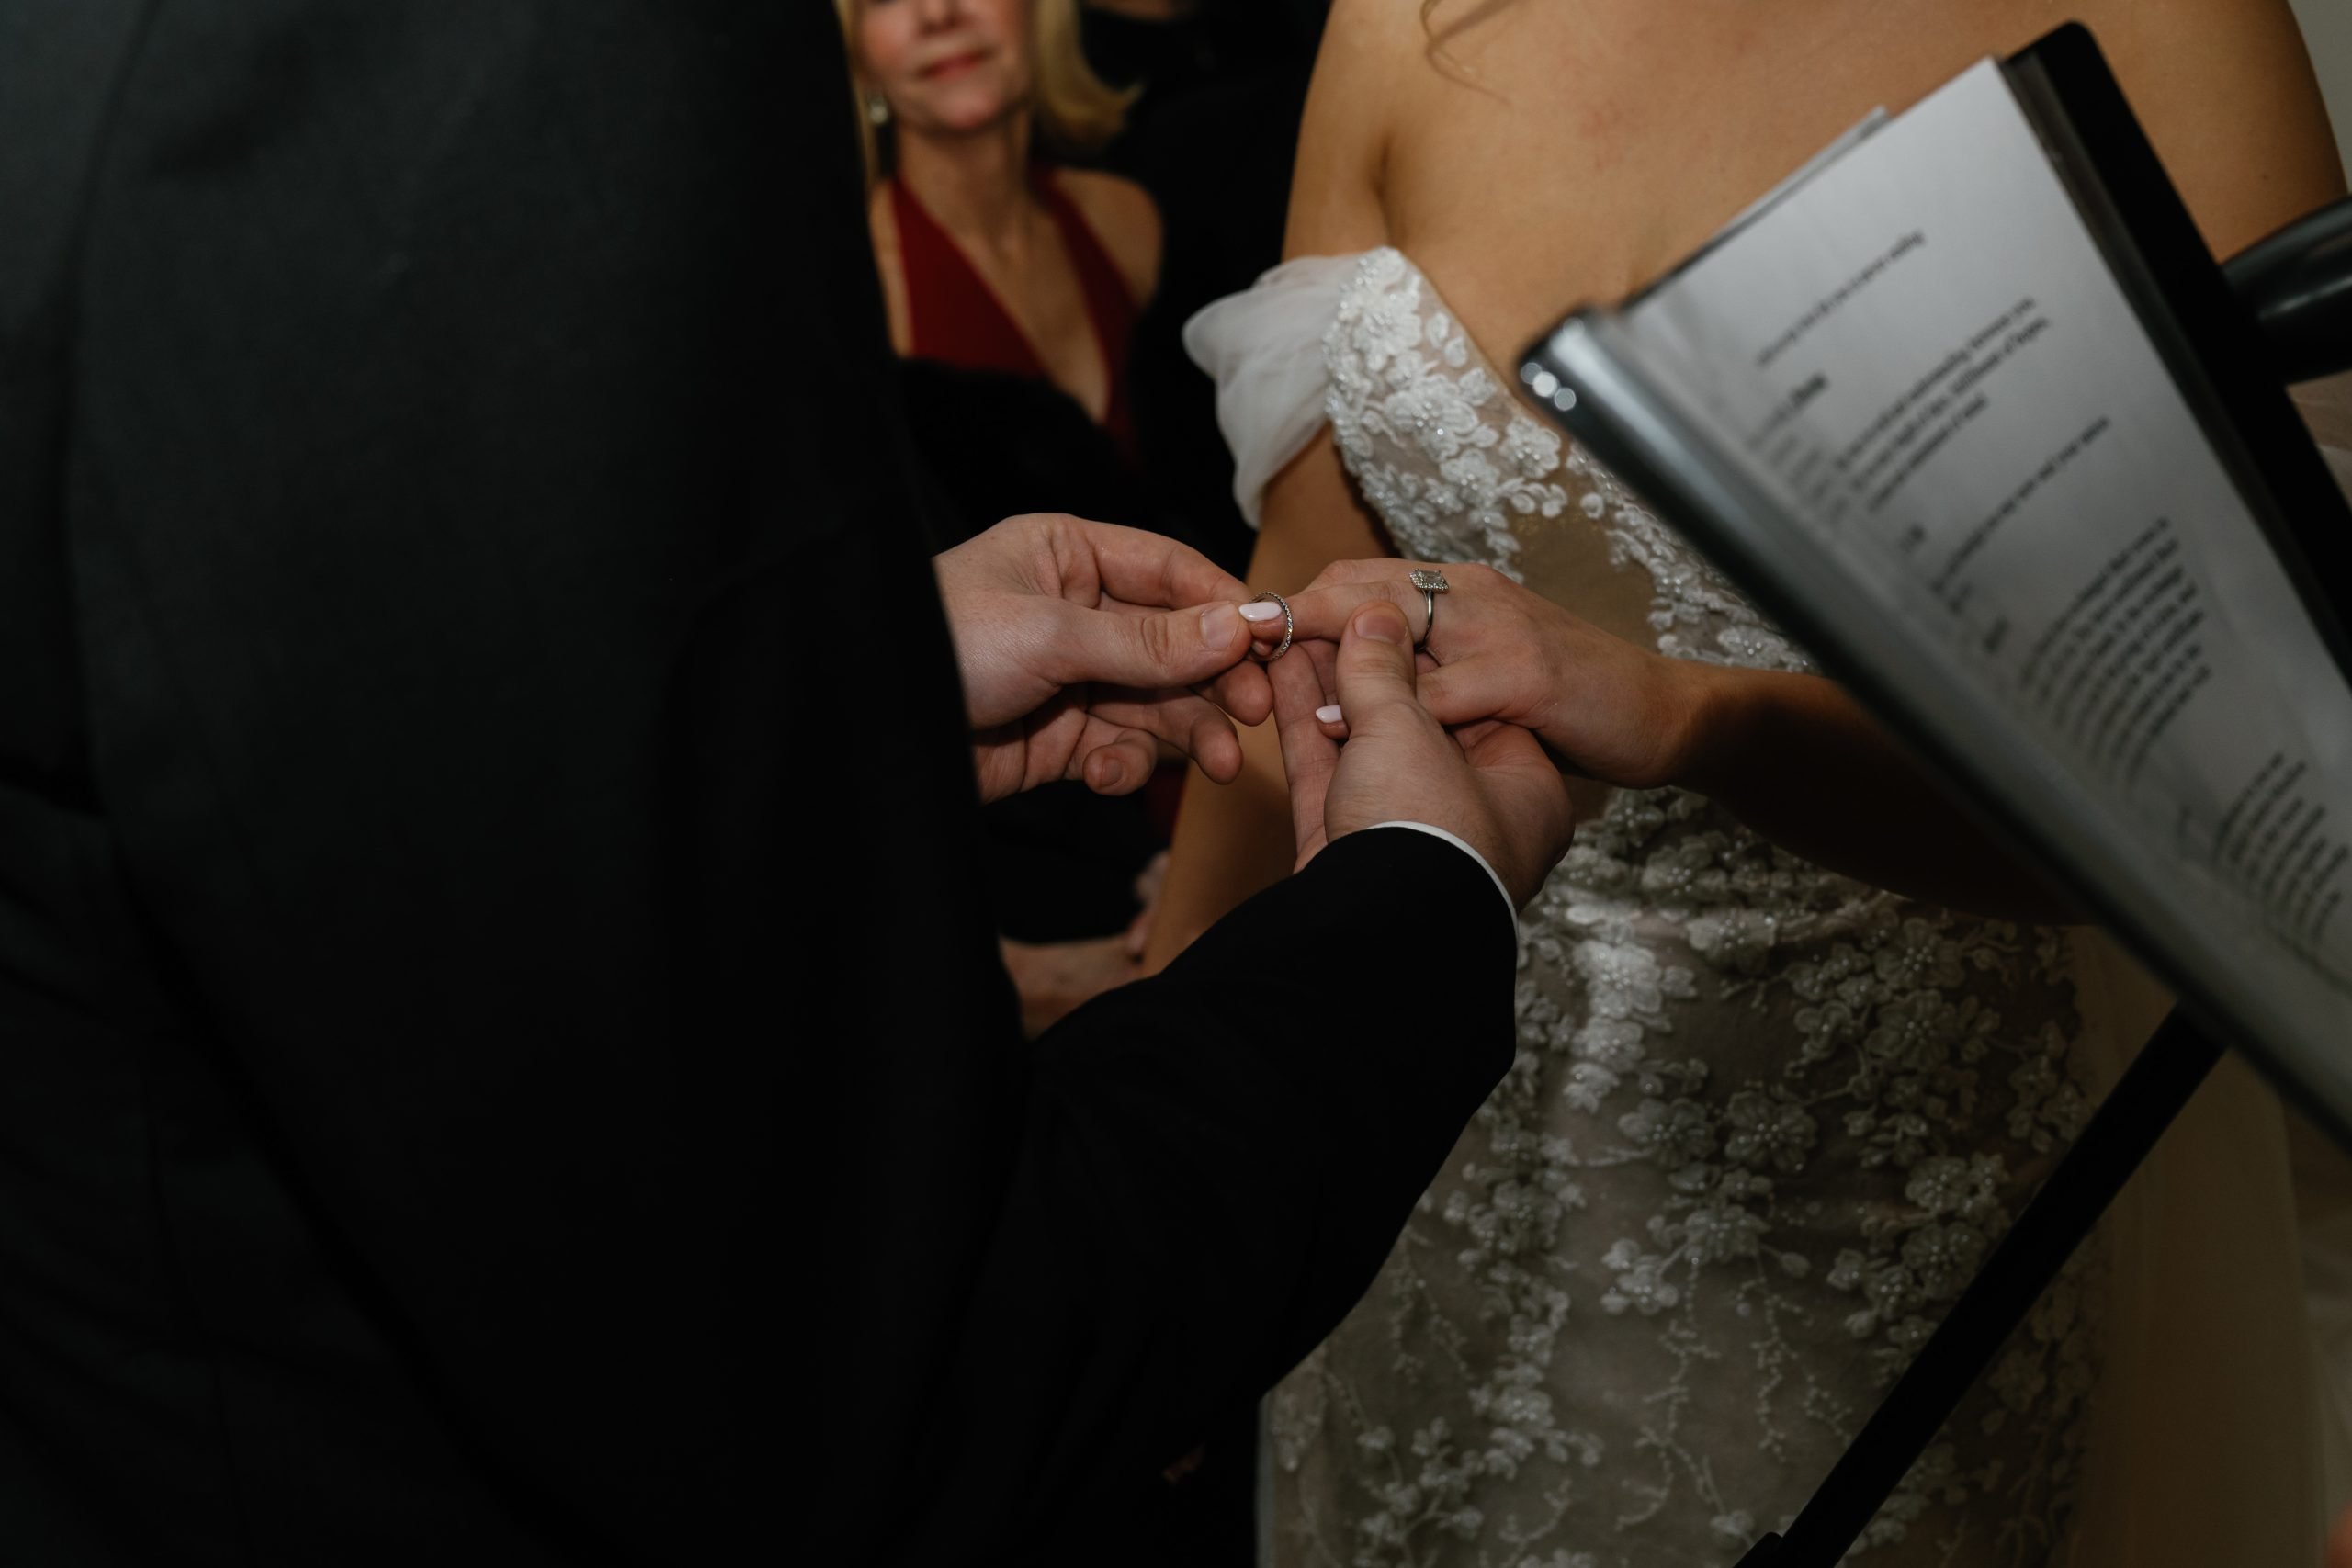 vows and ceremony at Sassafras Toronto